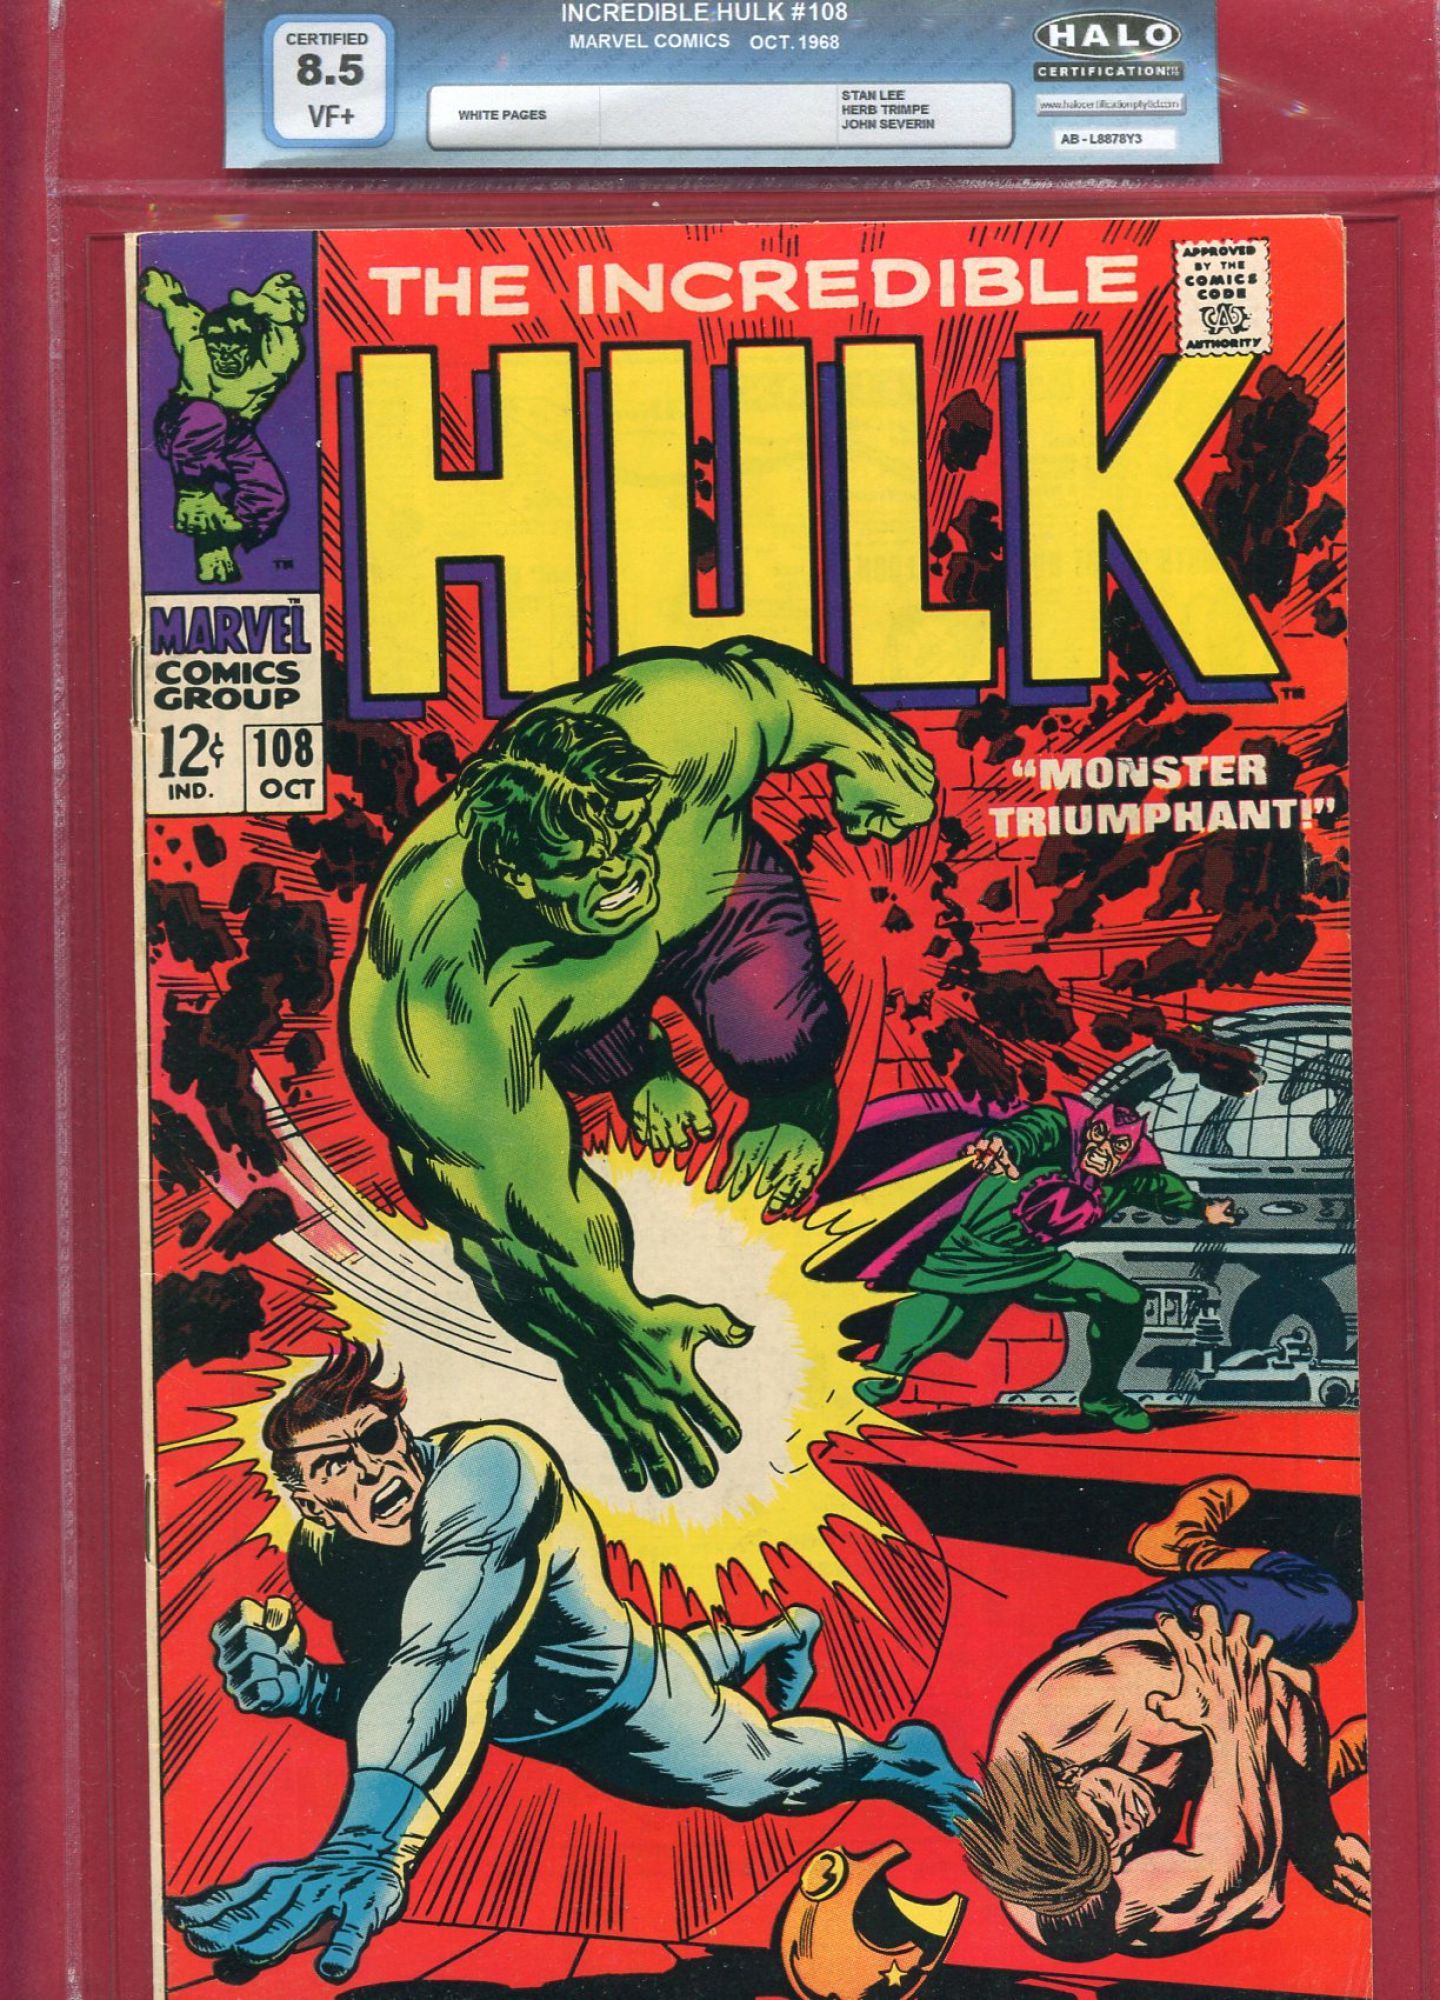 Incredible Hulk #108, Oct 1968, 8.5 VF+ Halo Soft Slab